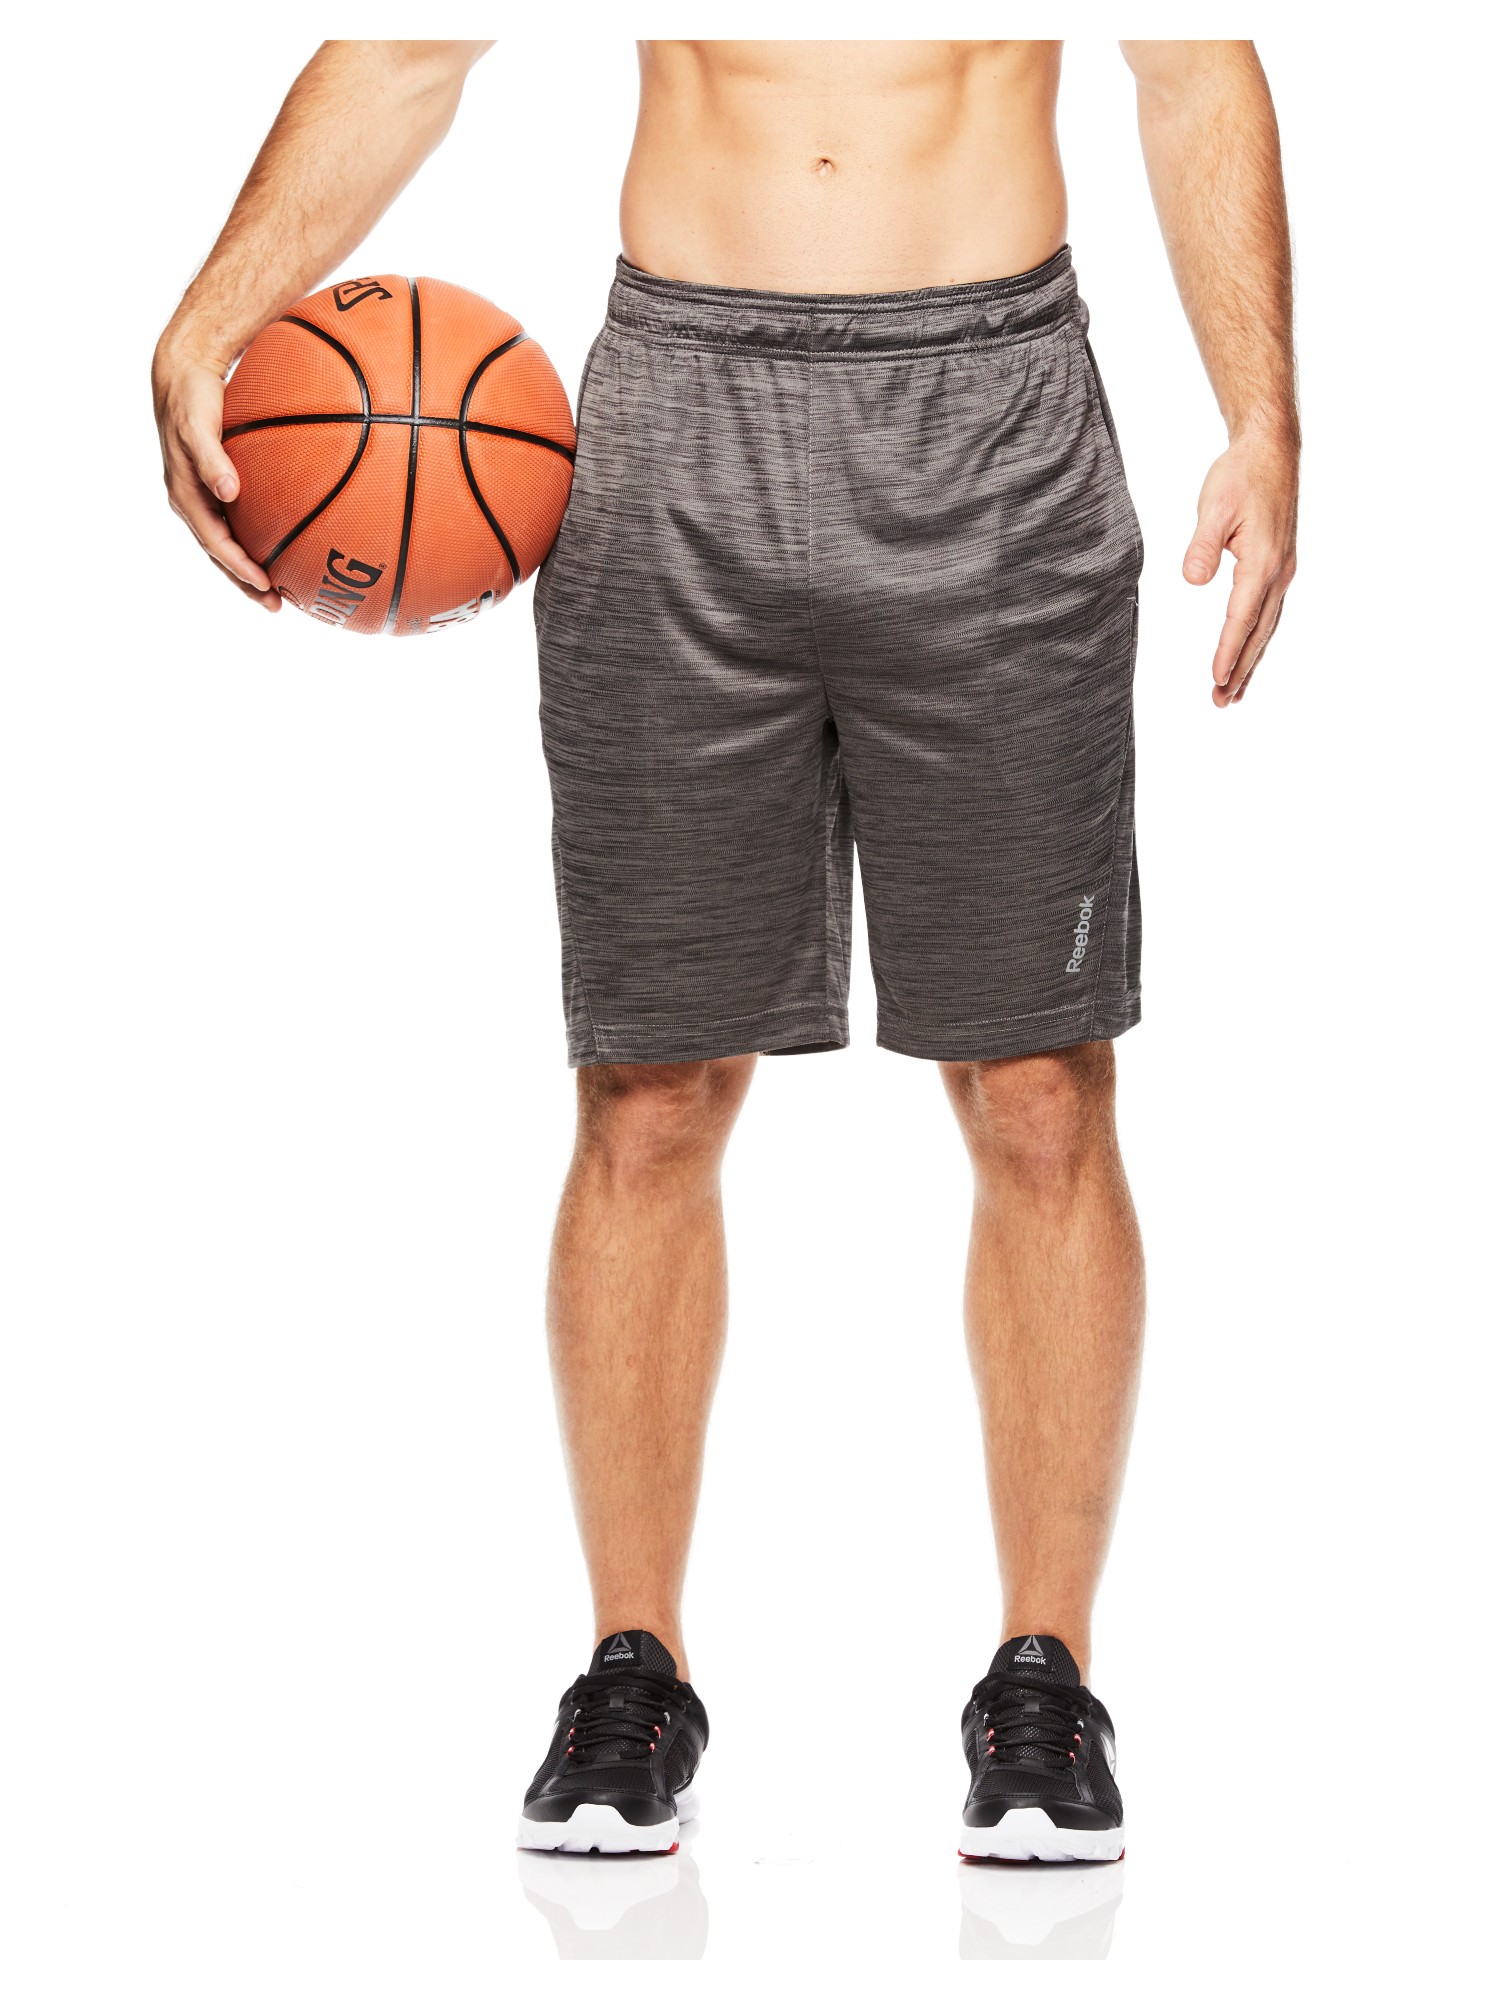 Reebok Men's 9" Cruz Athletic Shorts - image 3 of 4